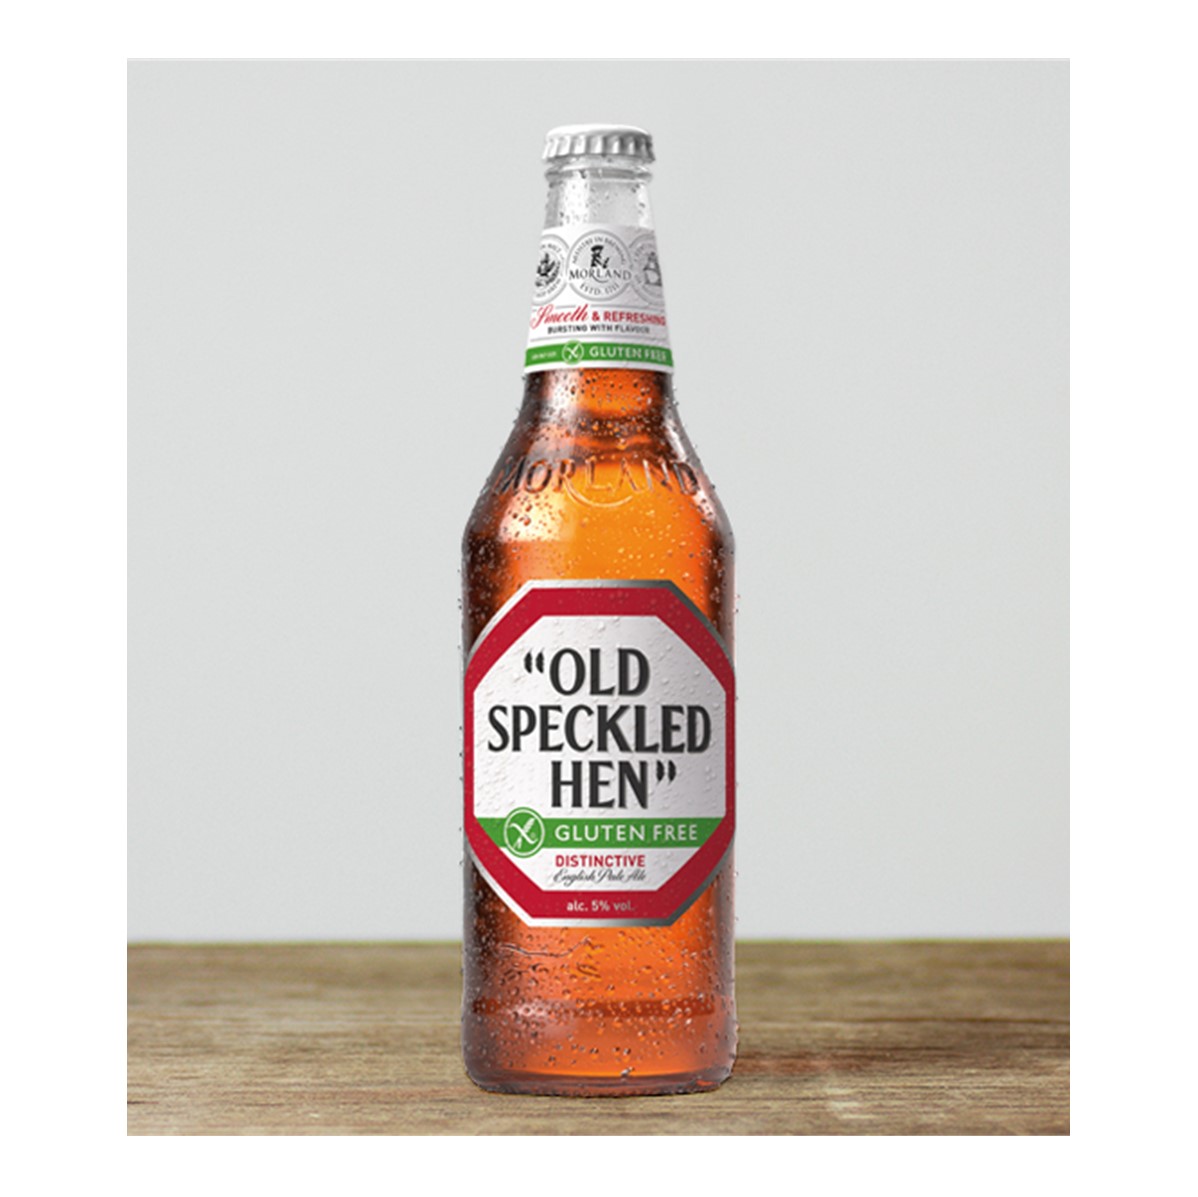 Old Speckled Hen English Pale Ale GLUTEN FREE - 8x500ml bottles